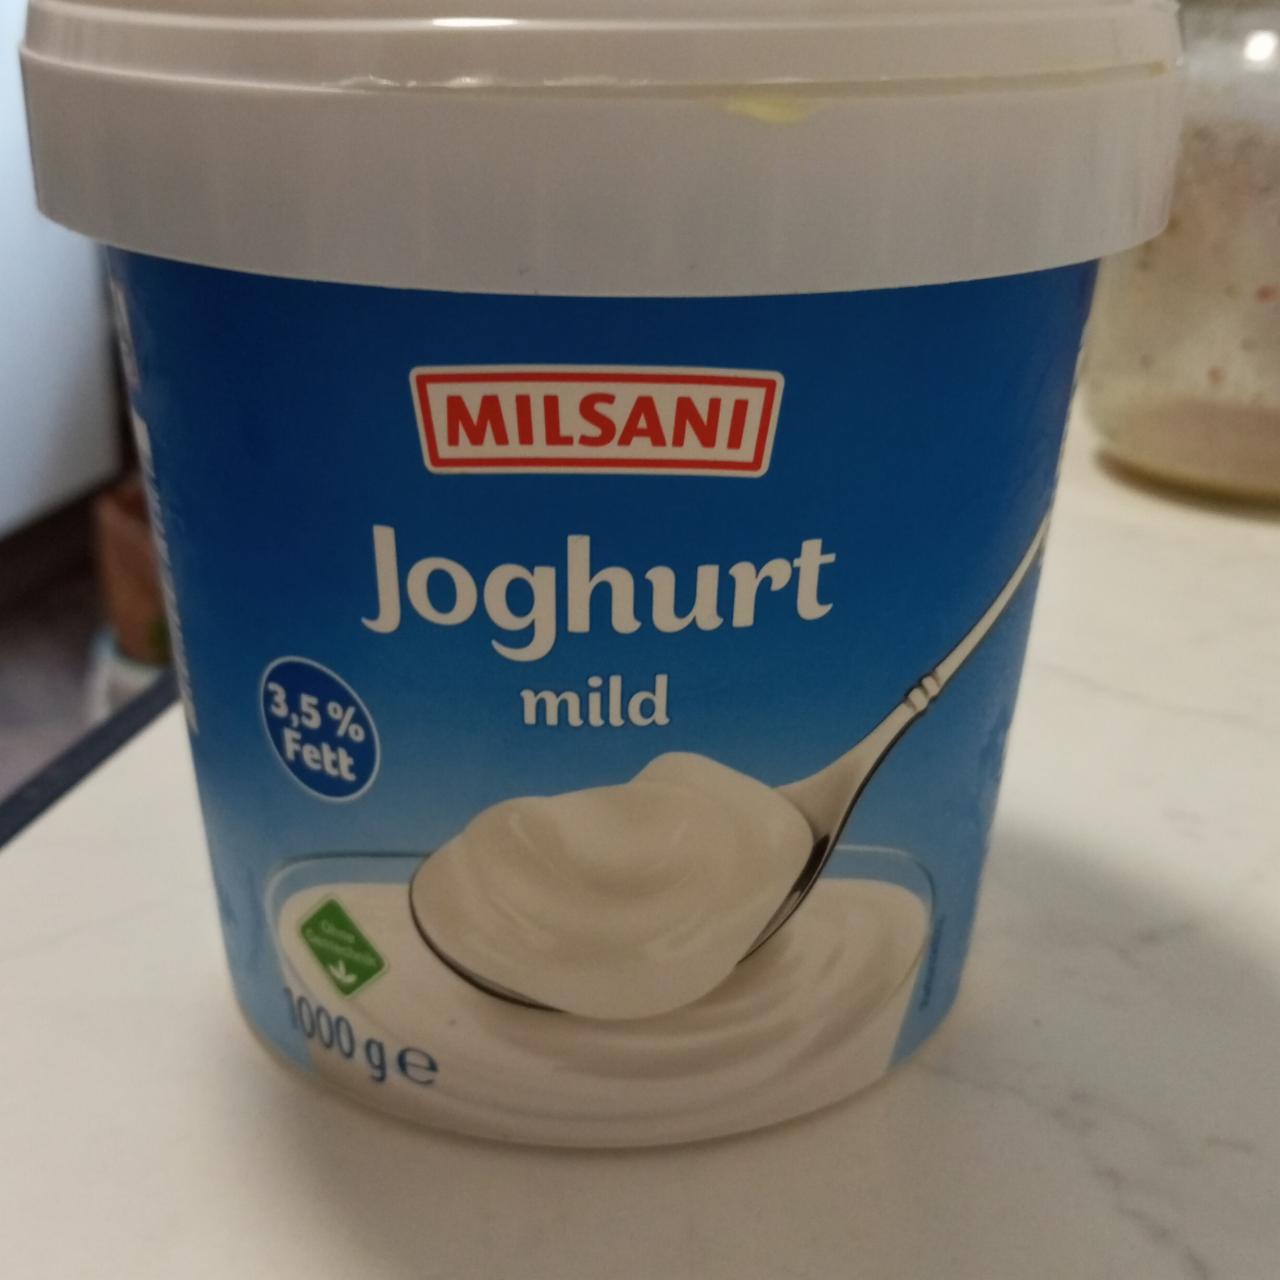 Фото - йогурт белый классический 3.5% fett Milsani